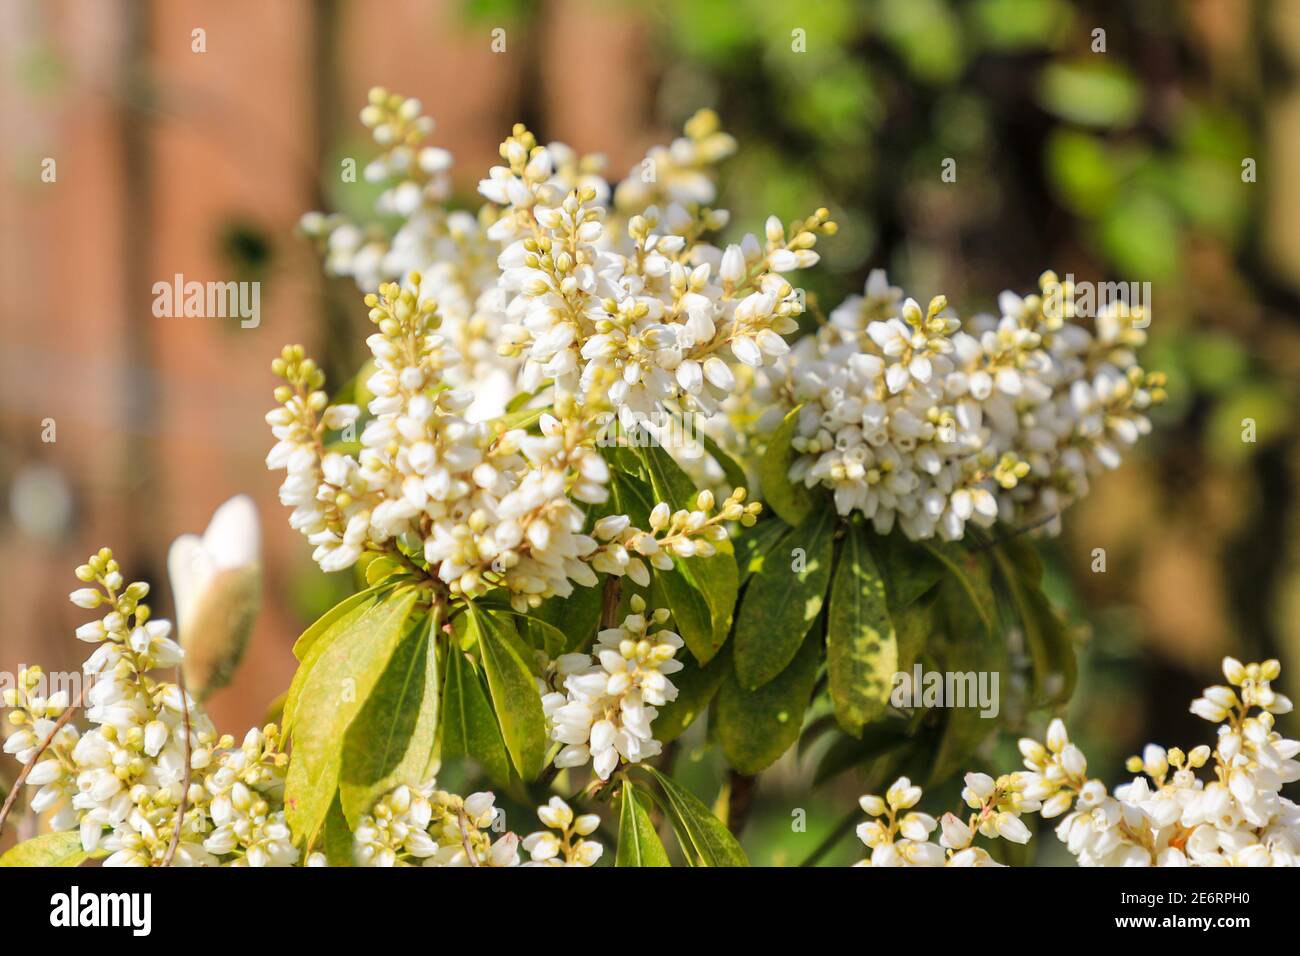 The white flower racemes of Pieris japonica 'Forest Flame' or Pieris floribunda 'Forest Flame' flowering shrub or bush, England, UK Stock Photo